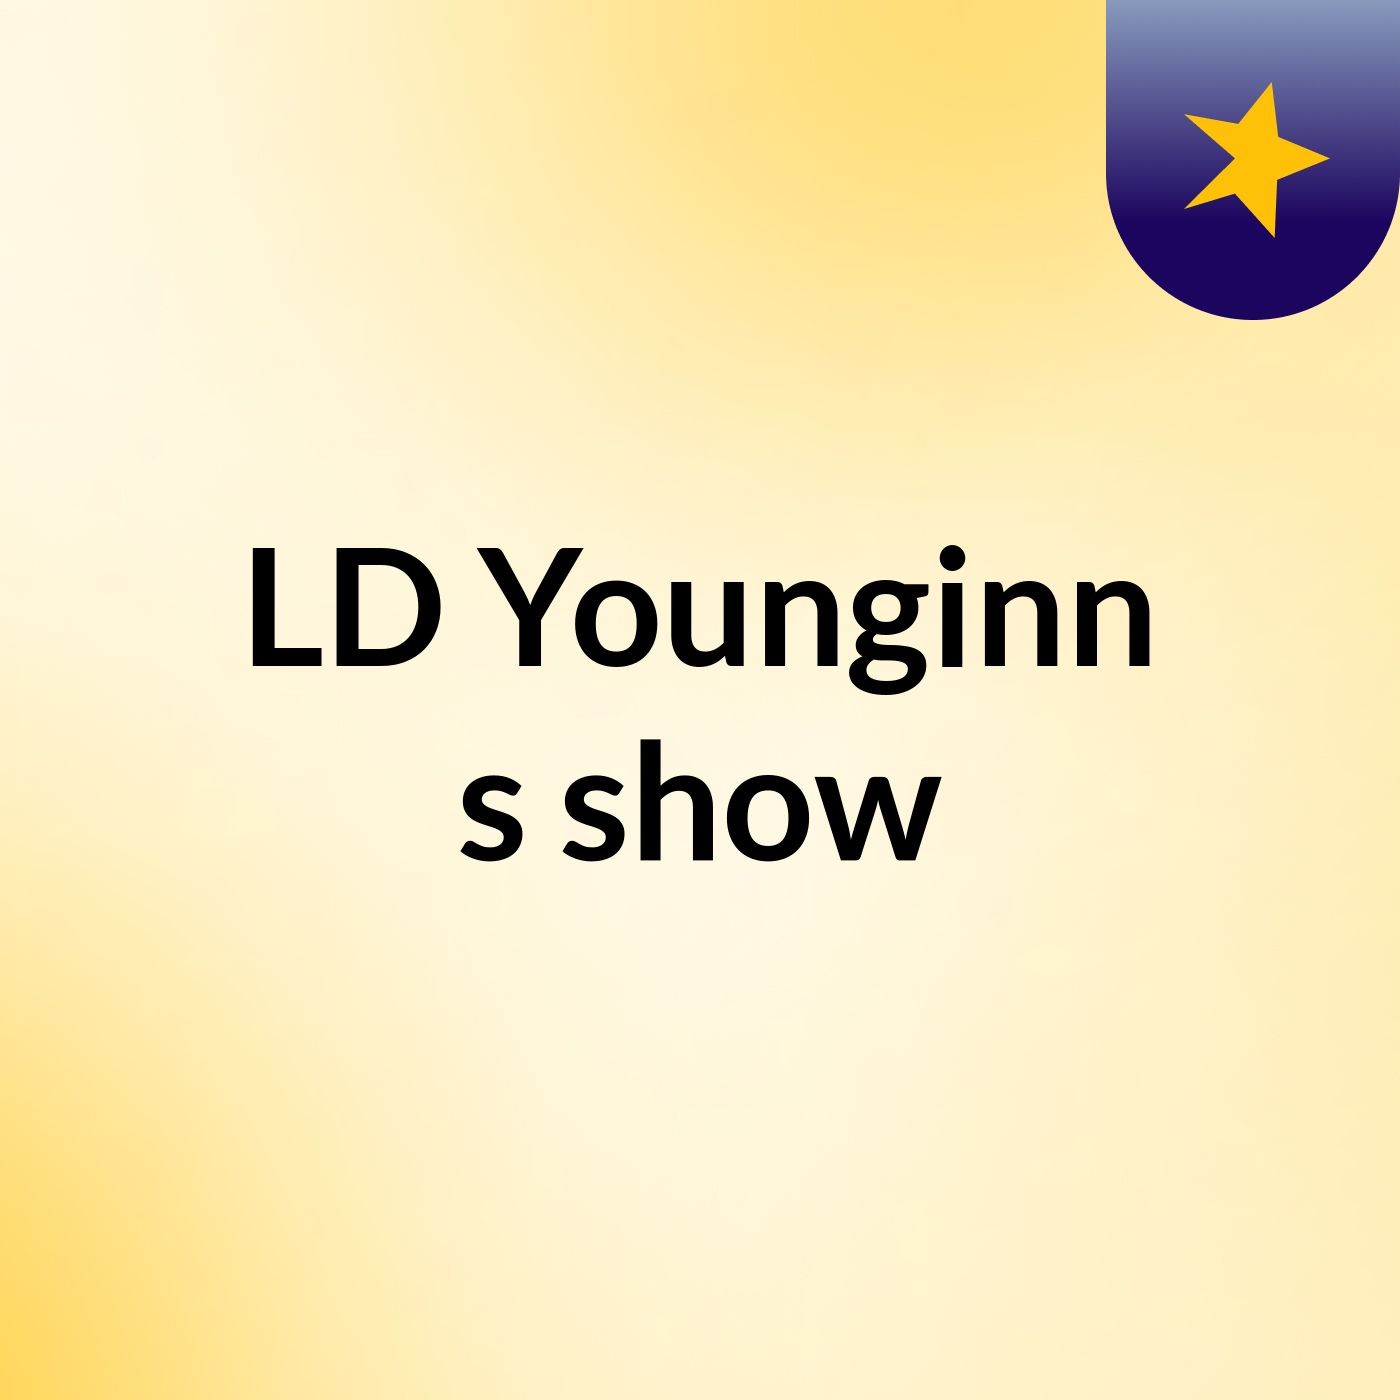 LD Younginn's show